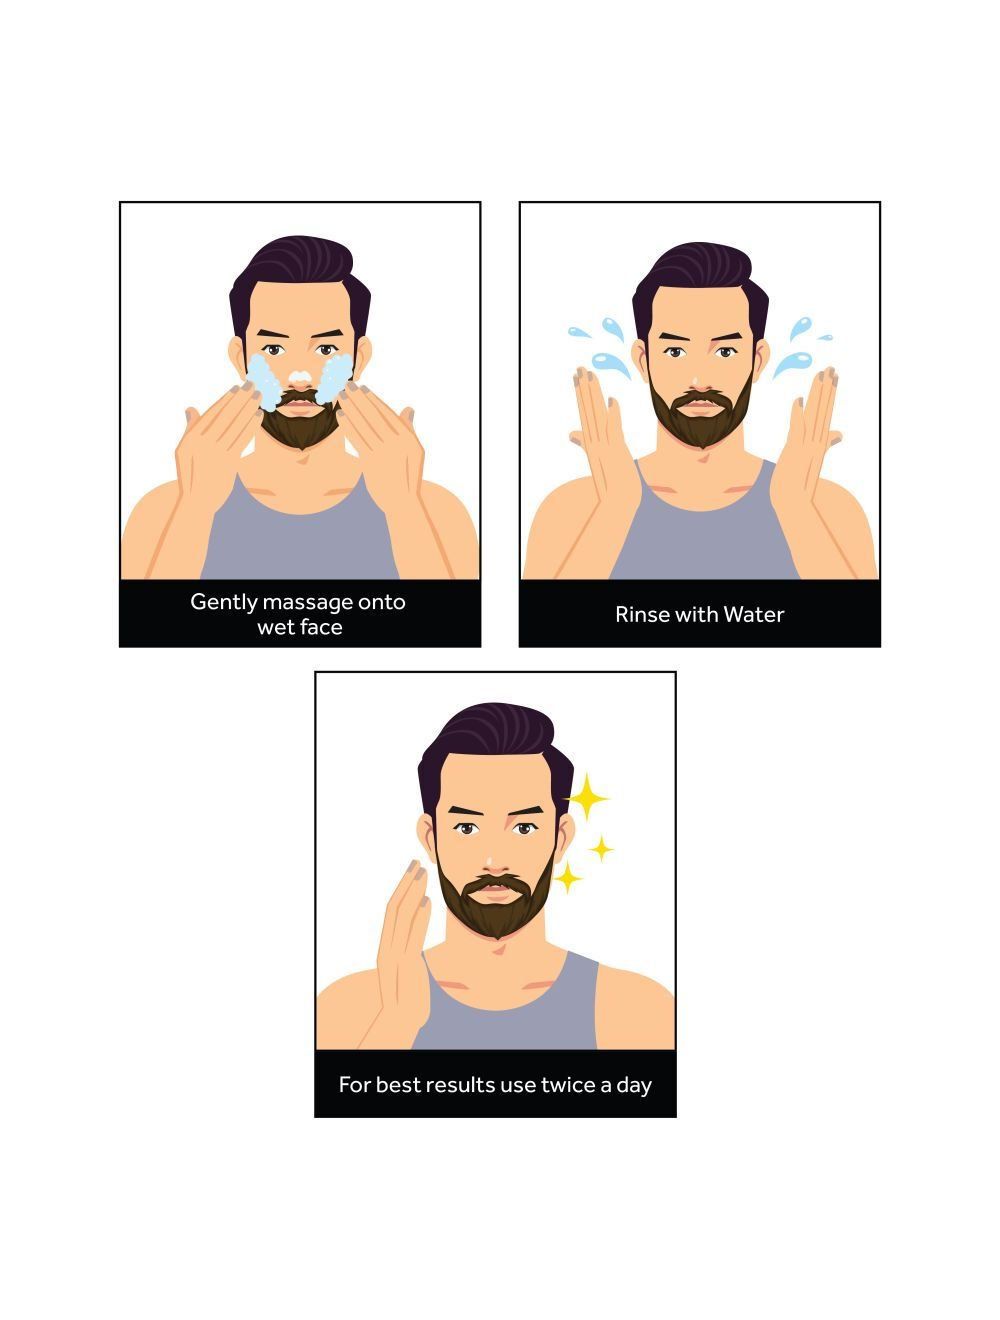 Pond's Men Pimple Clear Face Wash Acne Defence + Oil Control